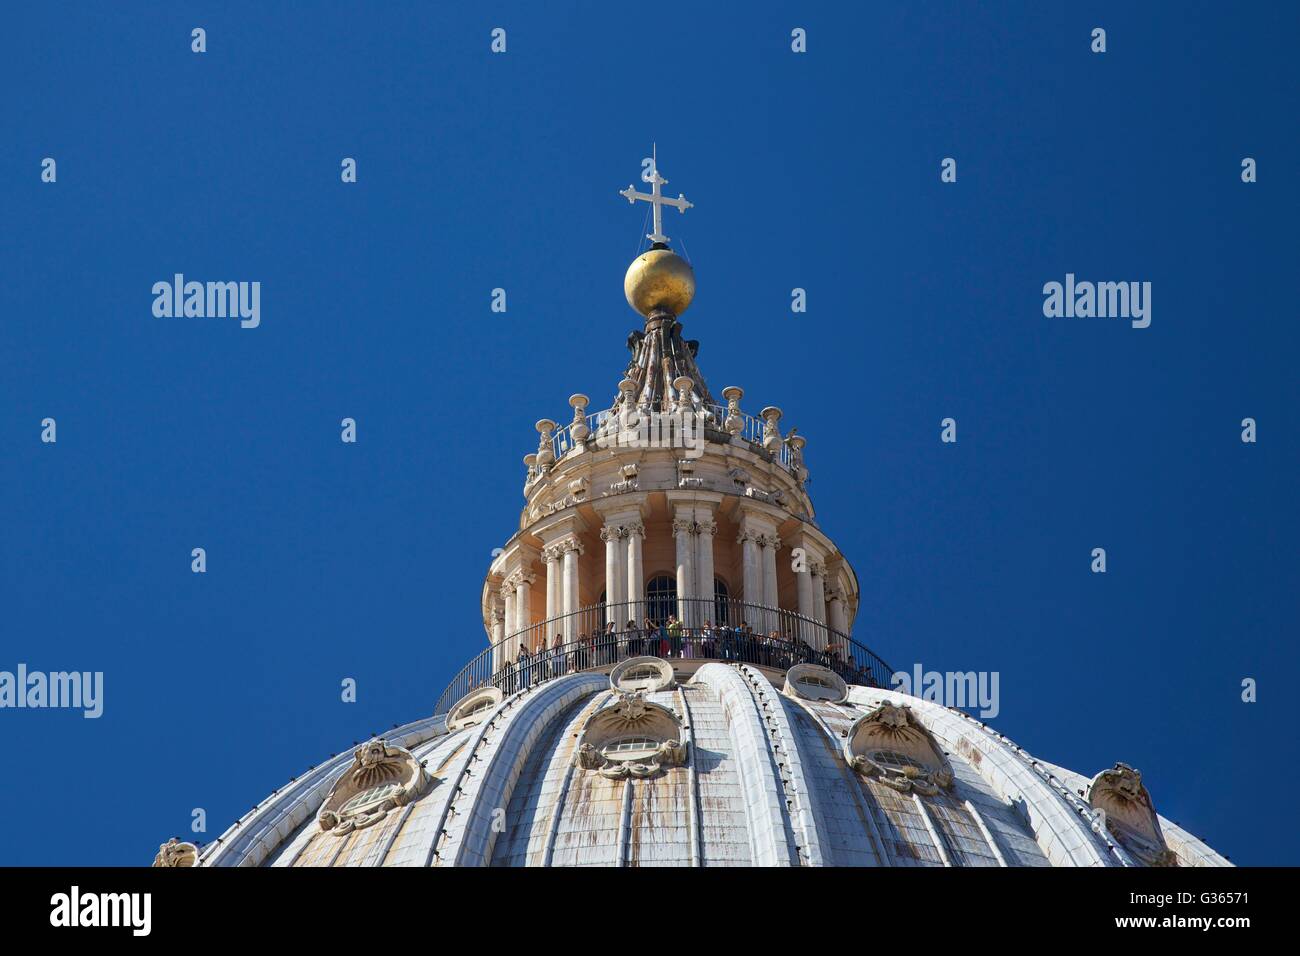 Terraza exterior vista de la cúpula de la Catedral de San Pedro, el Vaticano, Roma, Italia, Europa Foto de stock